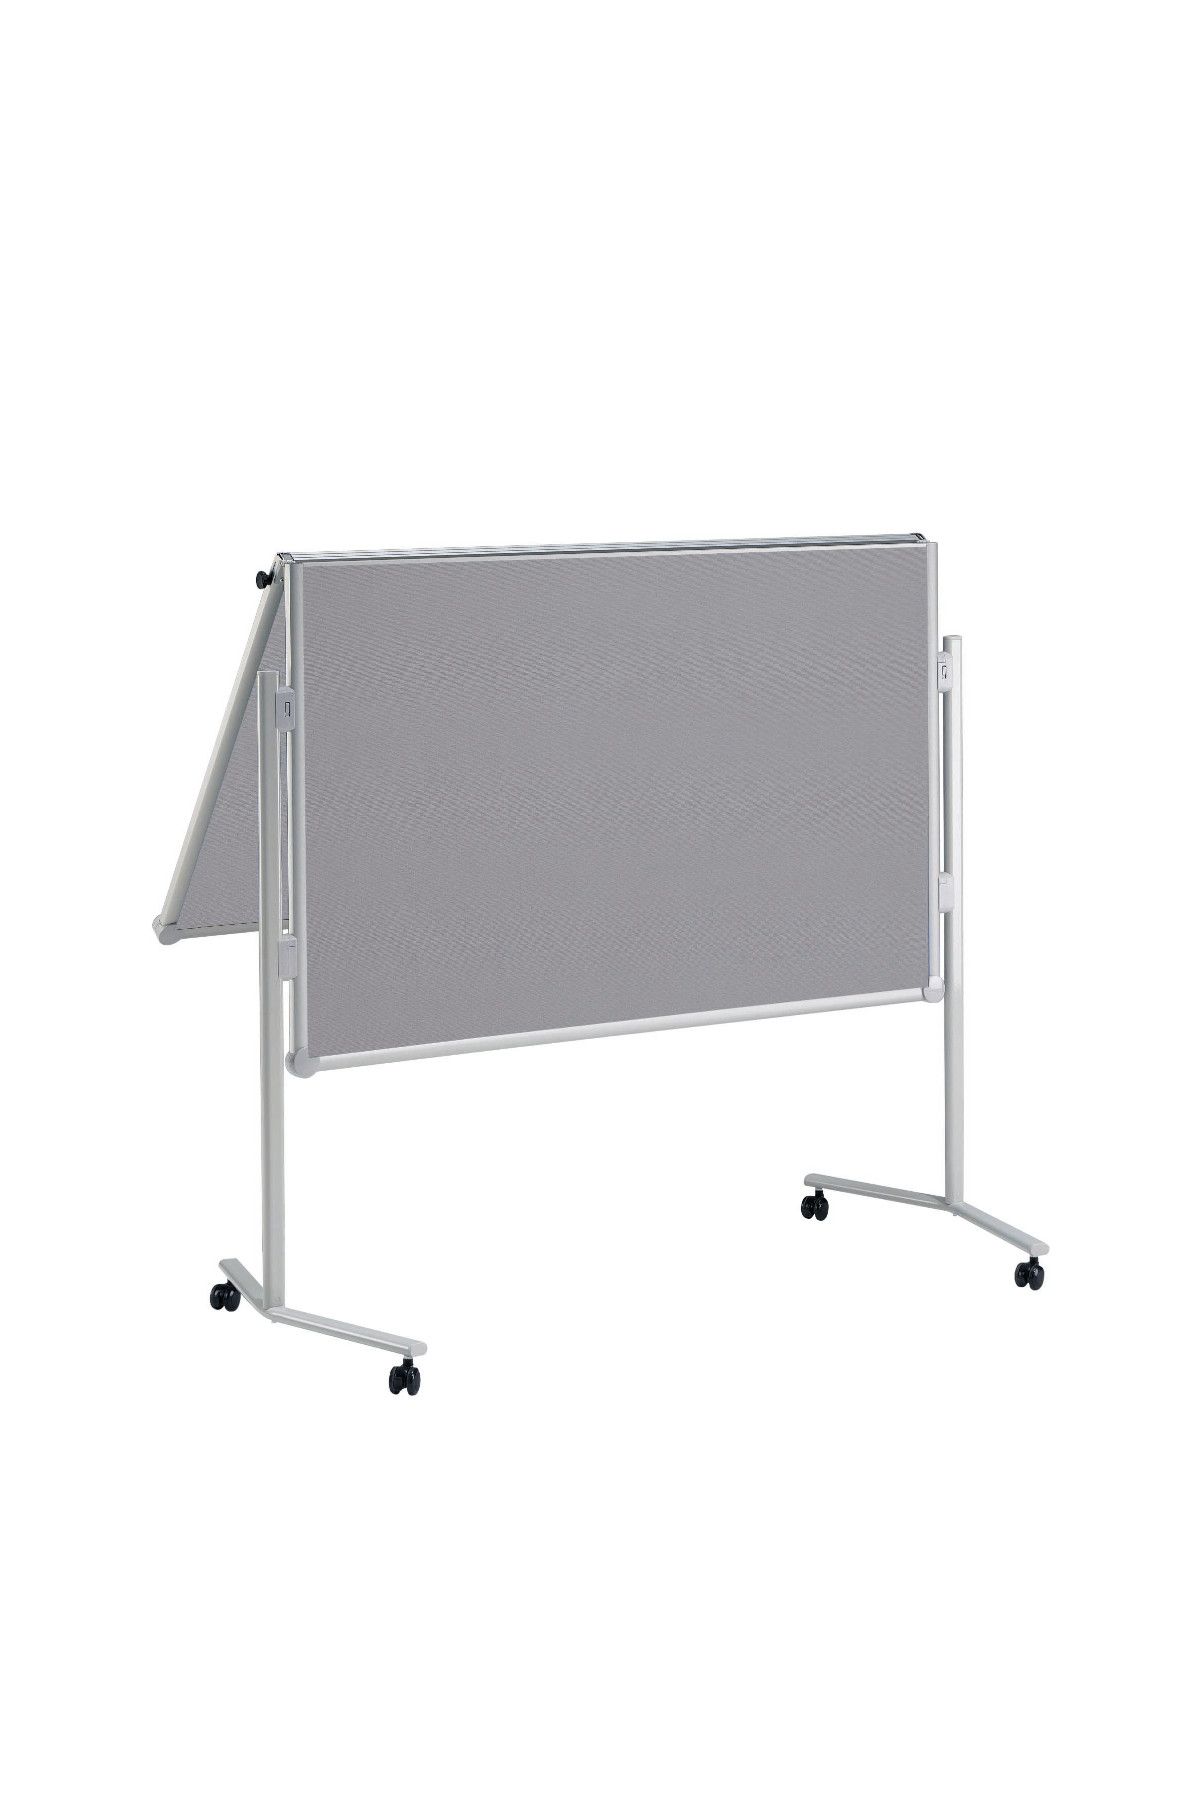 Moderationstafel MAULpro klappbar Textil grau,  150x120 cm 